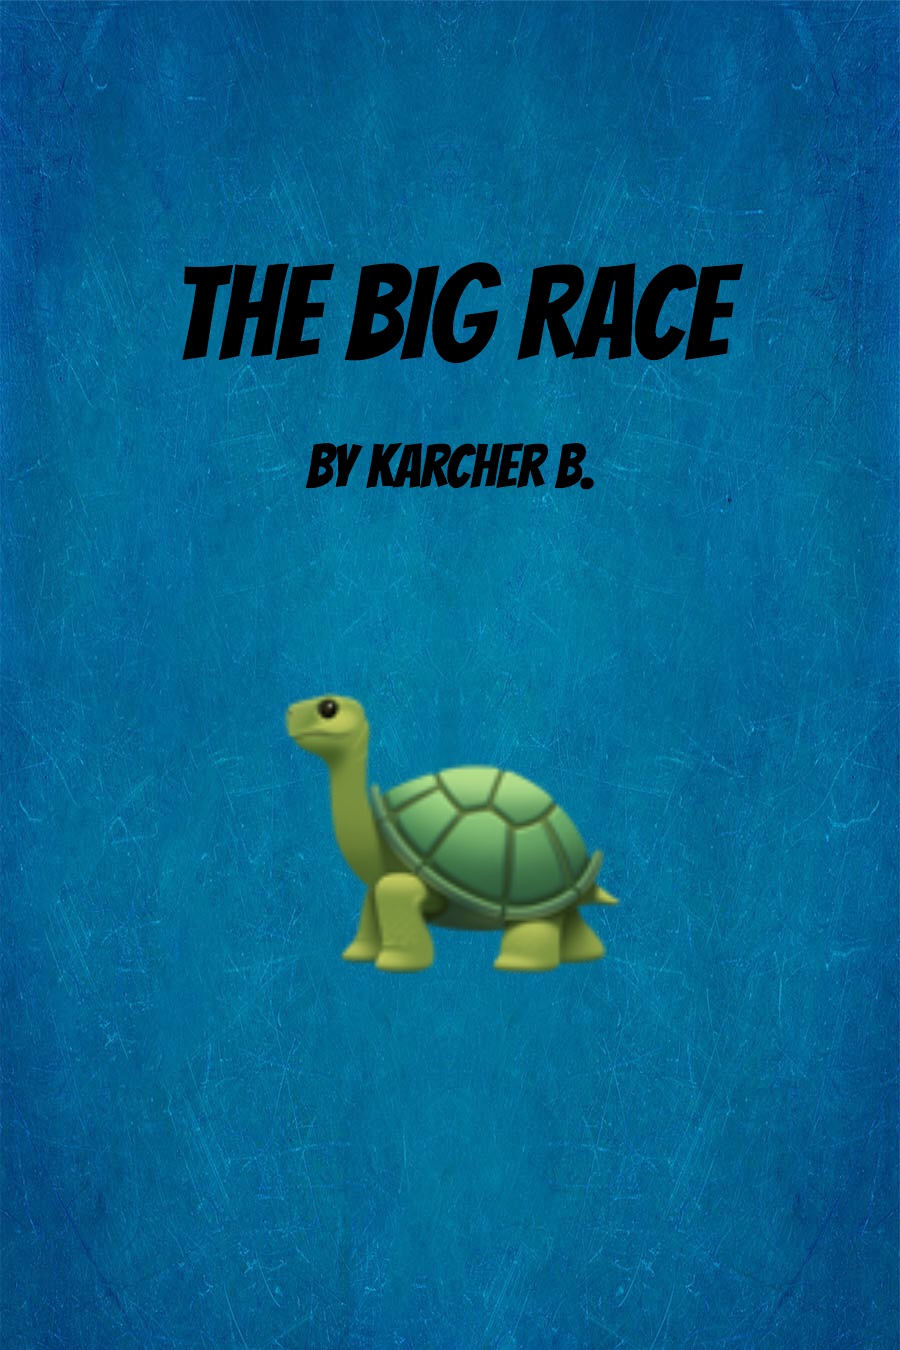 The Big Race by Karcher B